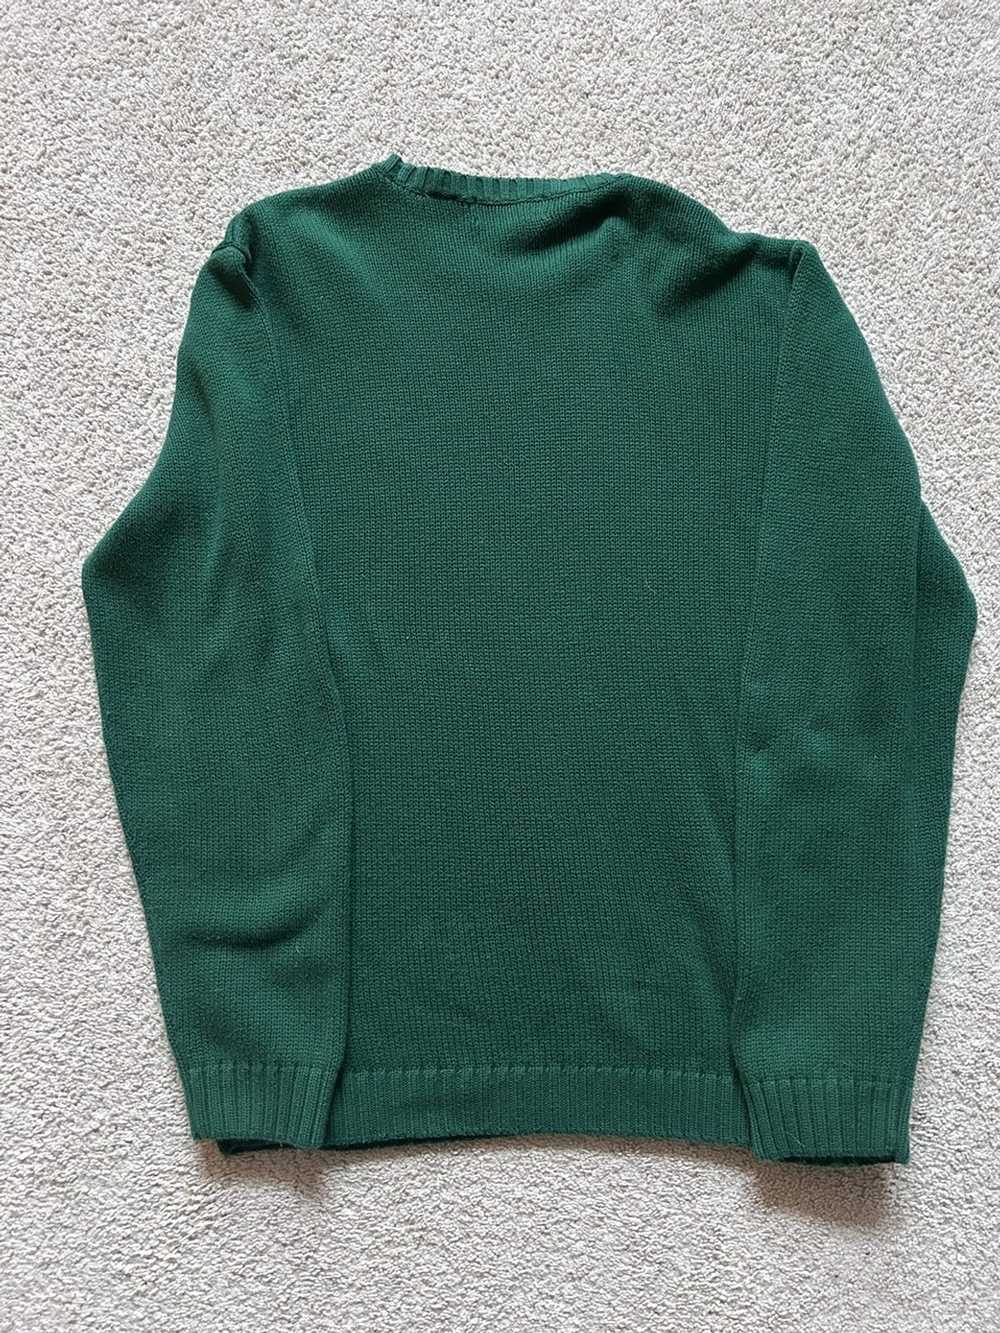 Chaps × Vintage Chaps Sweater - image 2